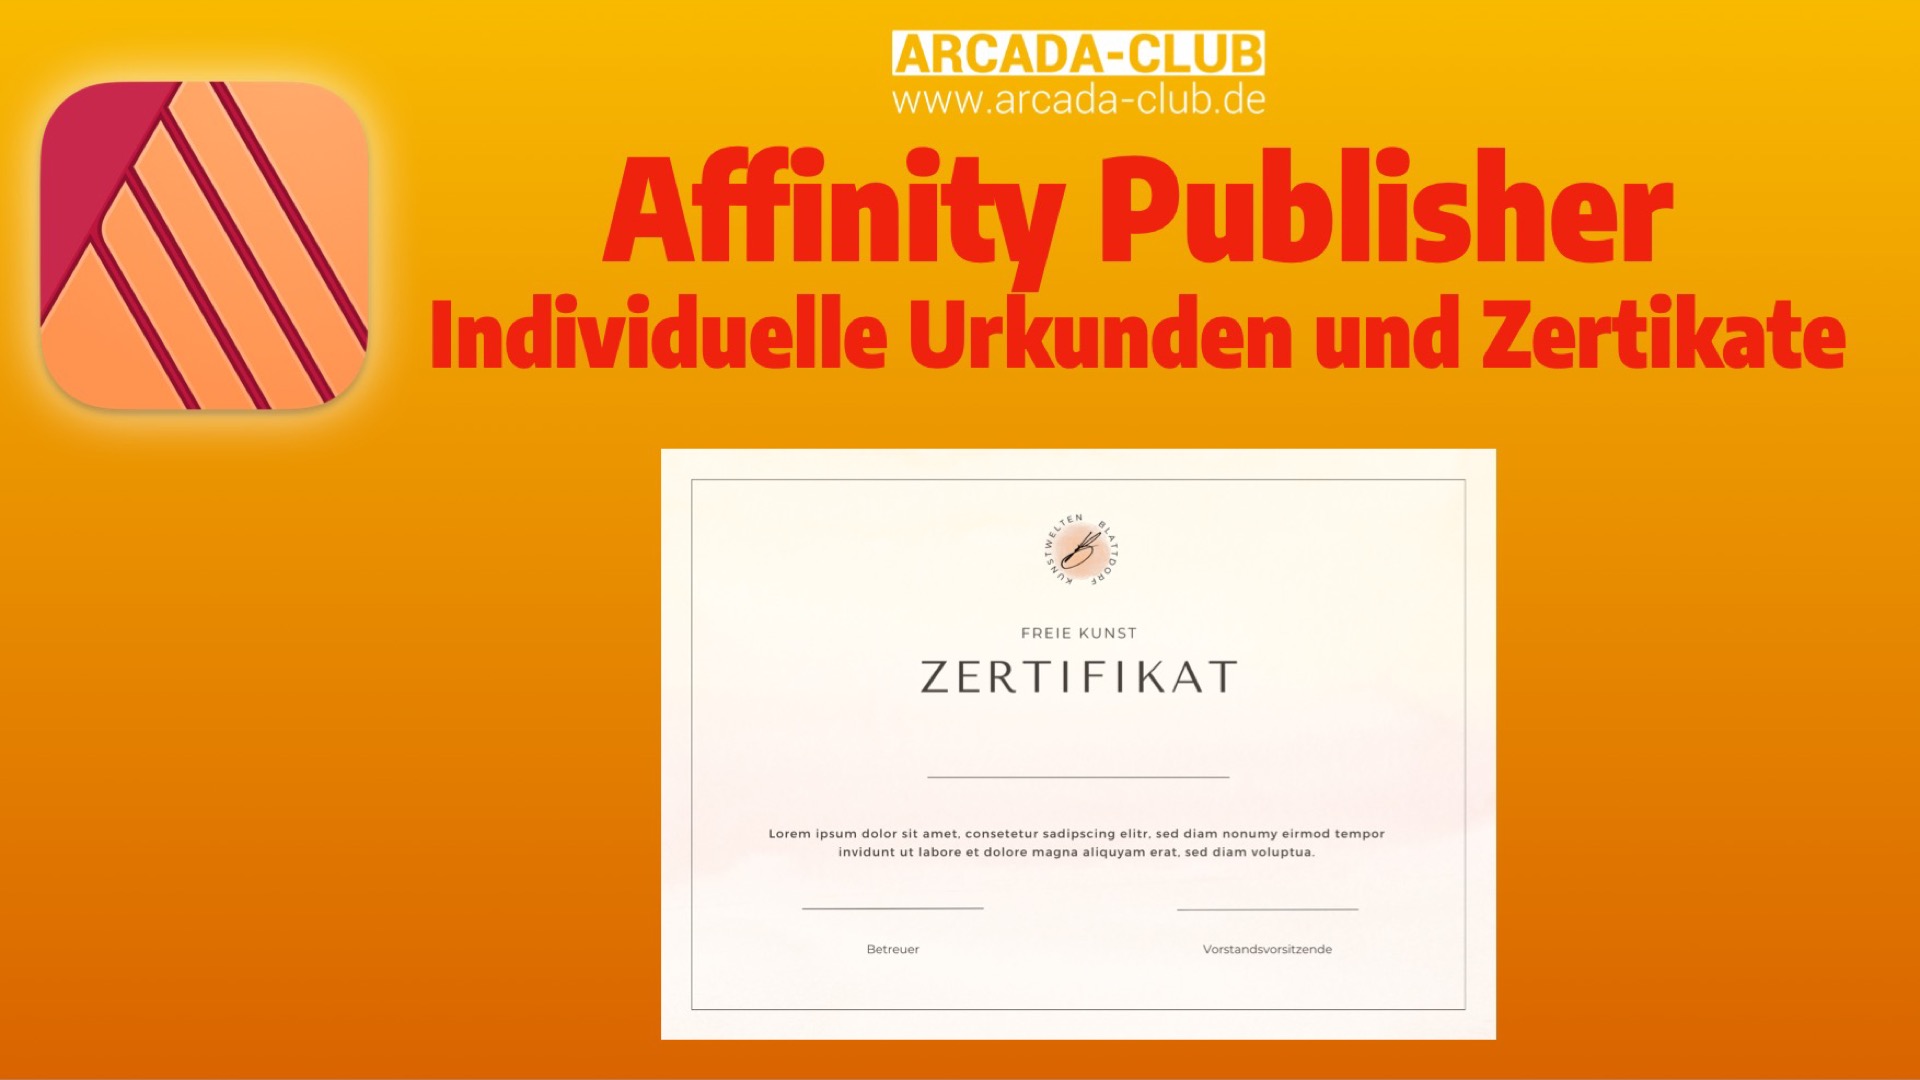 Image for Affinity Publisher - Individuelle Urkunden und Zertikate